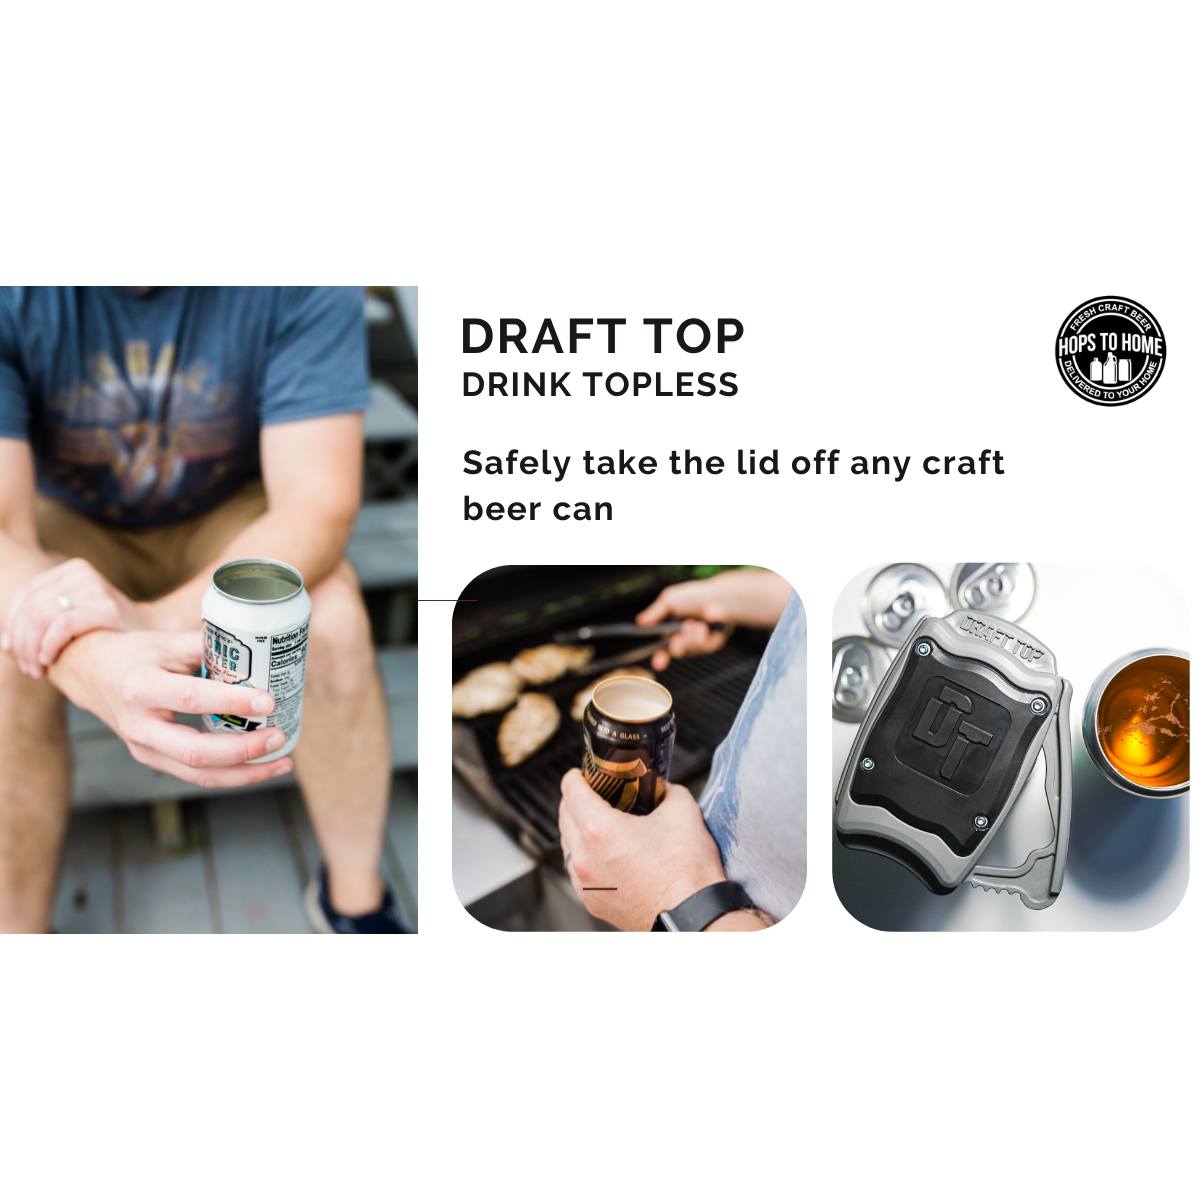 The Draft Top 3.0 Beer Can Opener